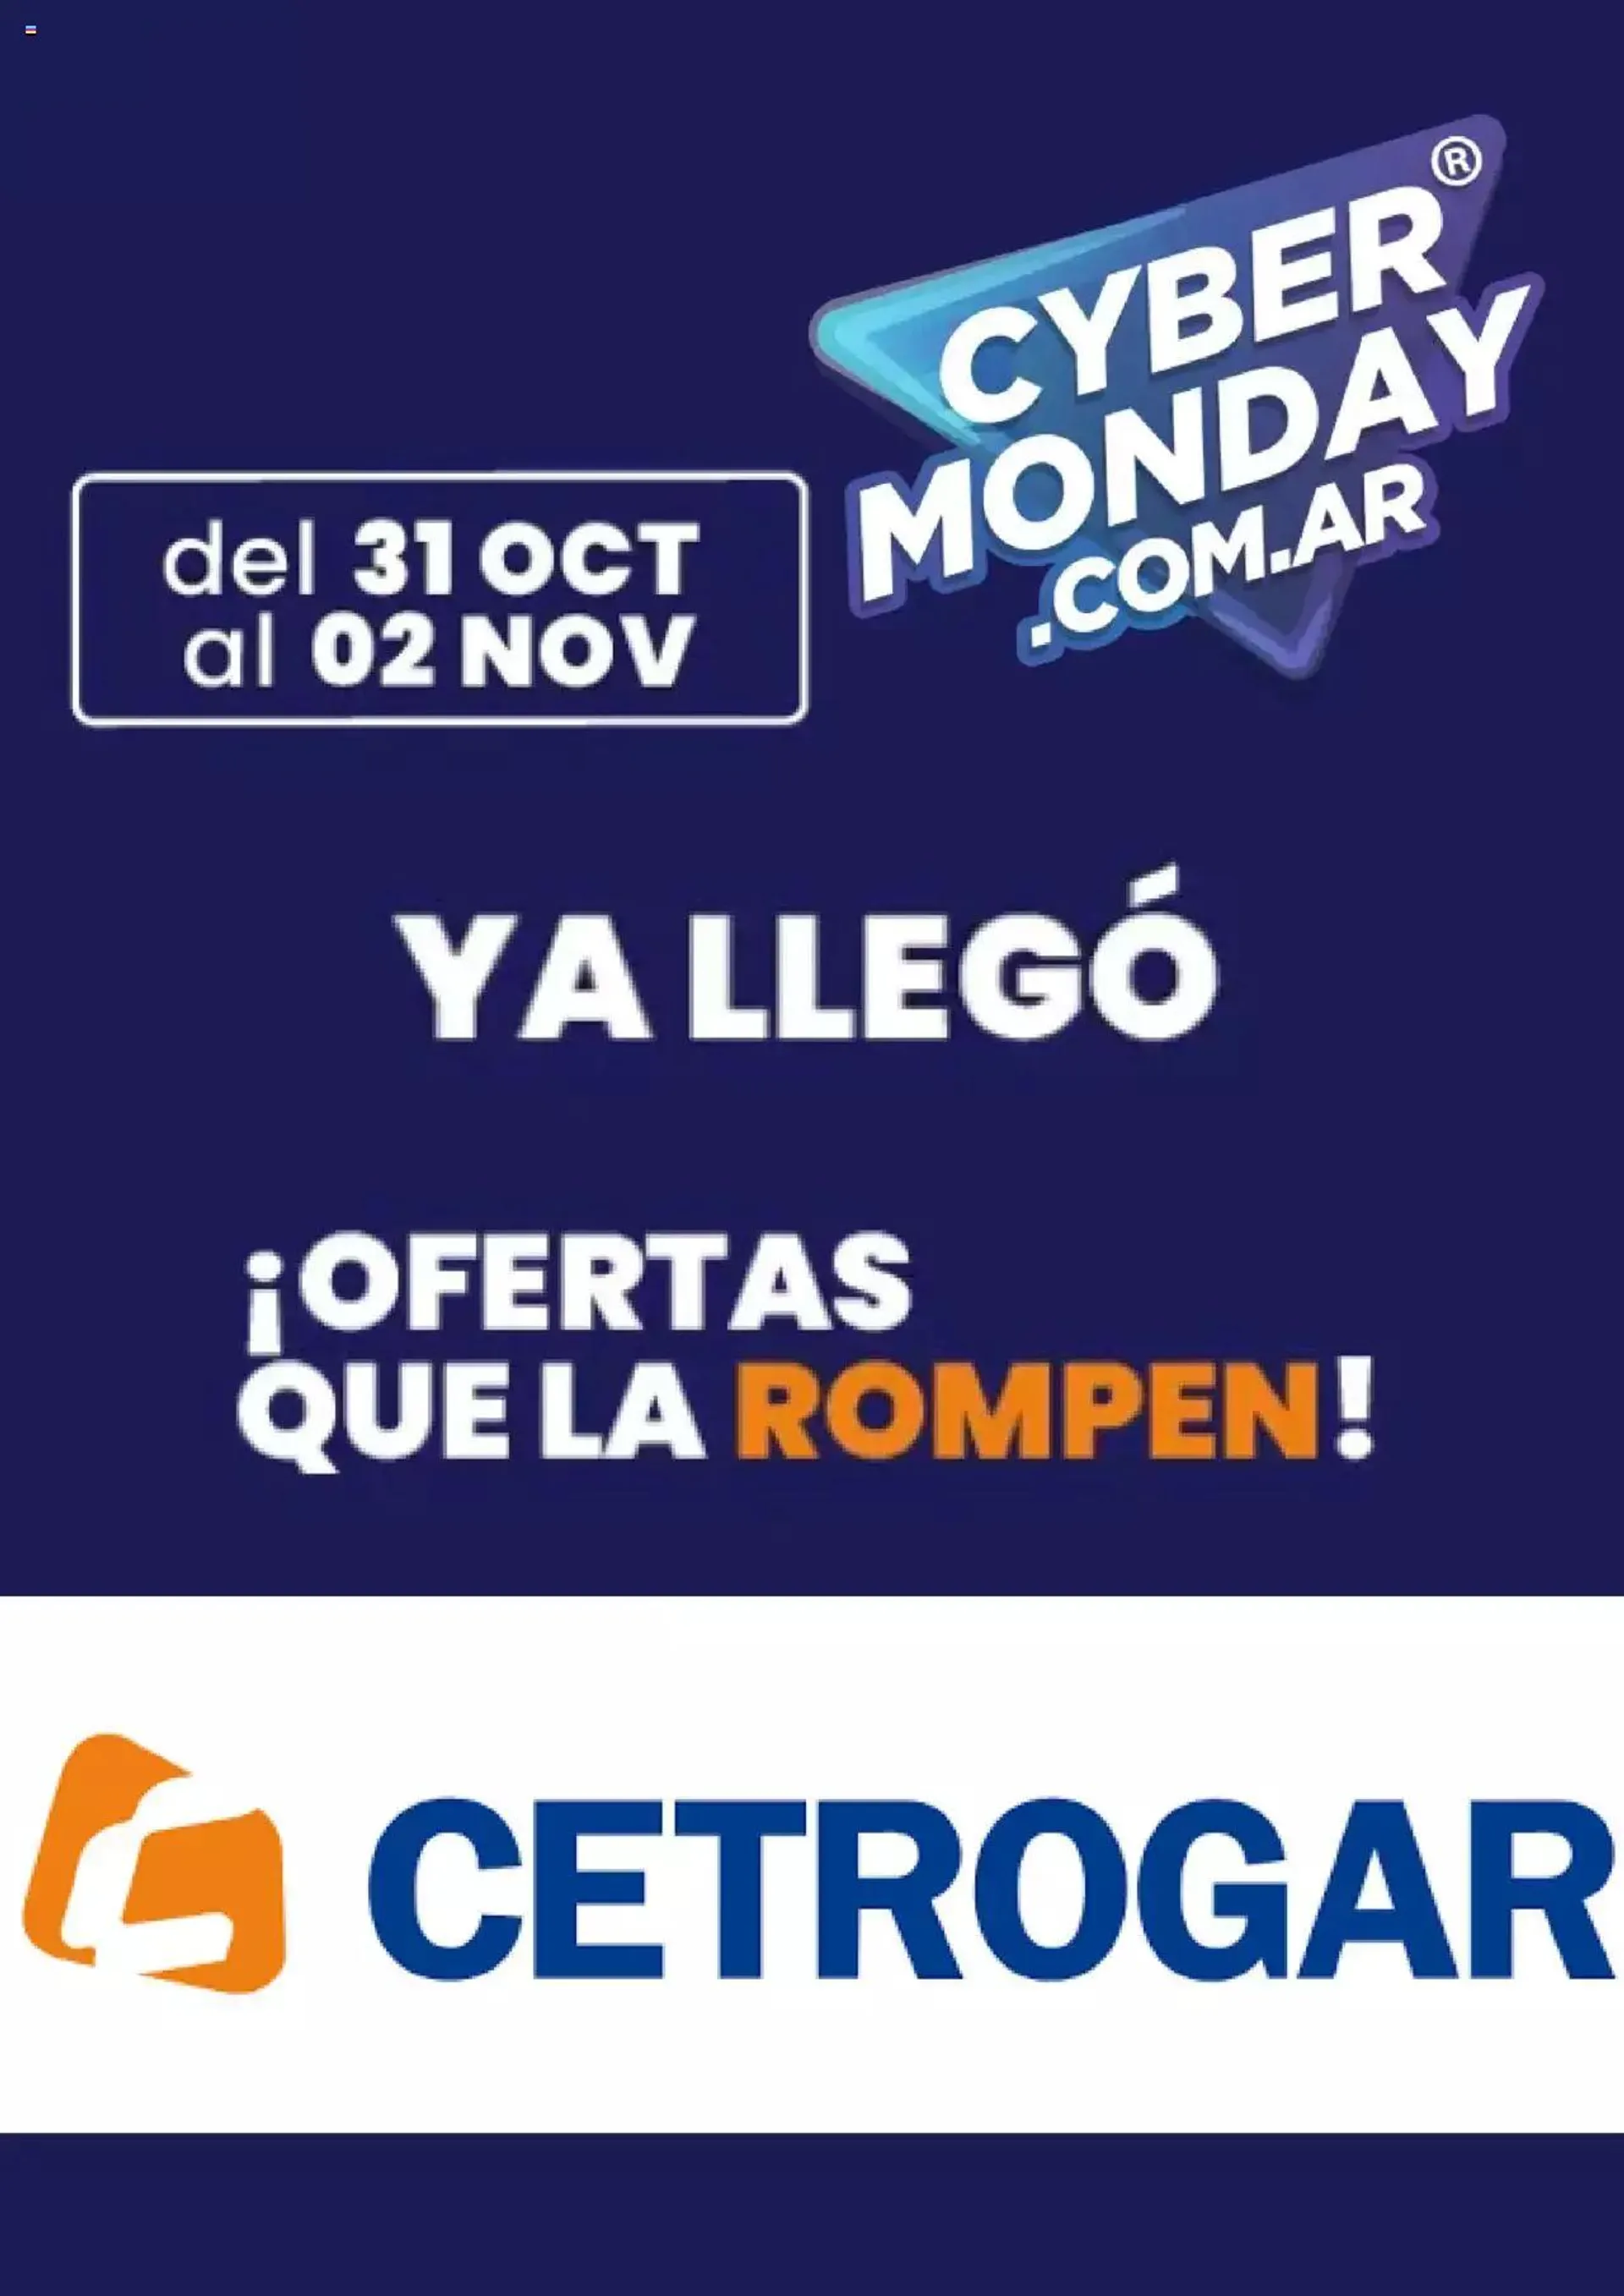 Cetrogar - Cyber Monday - 0